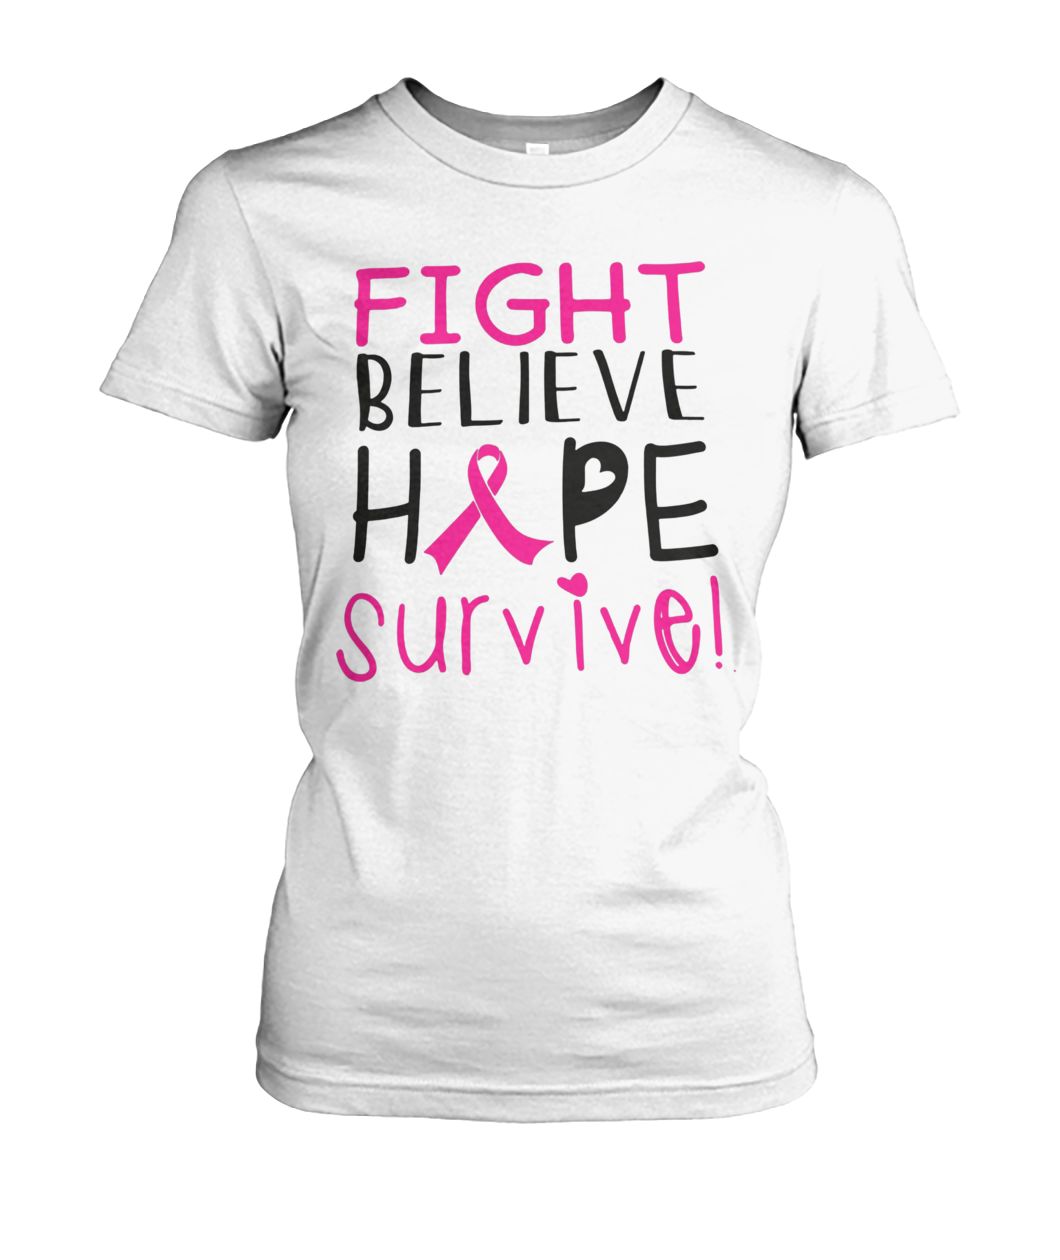 Fight believe hope survive breast cancer awareness women's crew tee